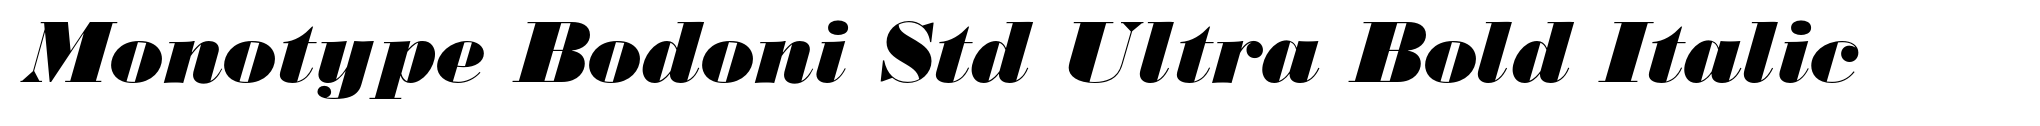 Monotype Bodoni Std Ultra Bold Italic image